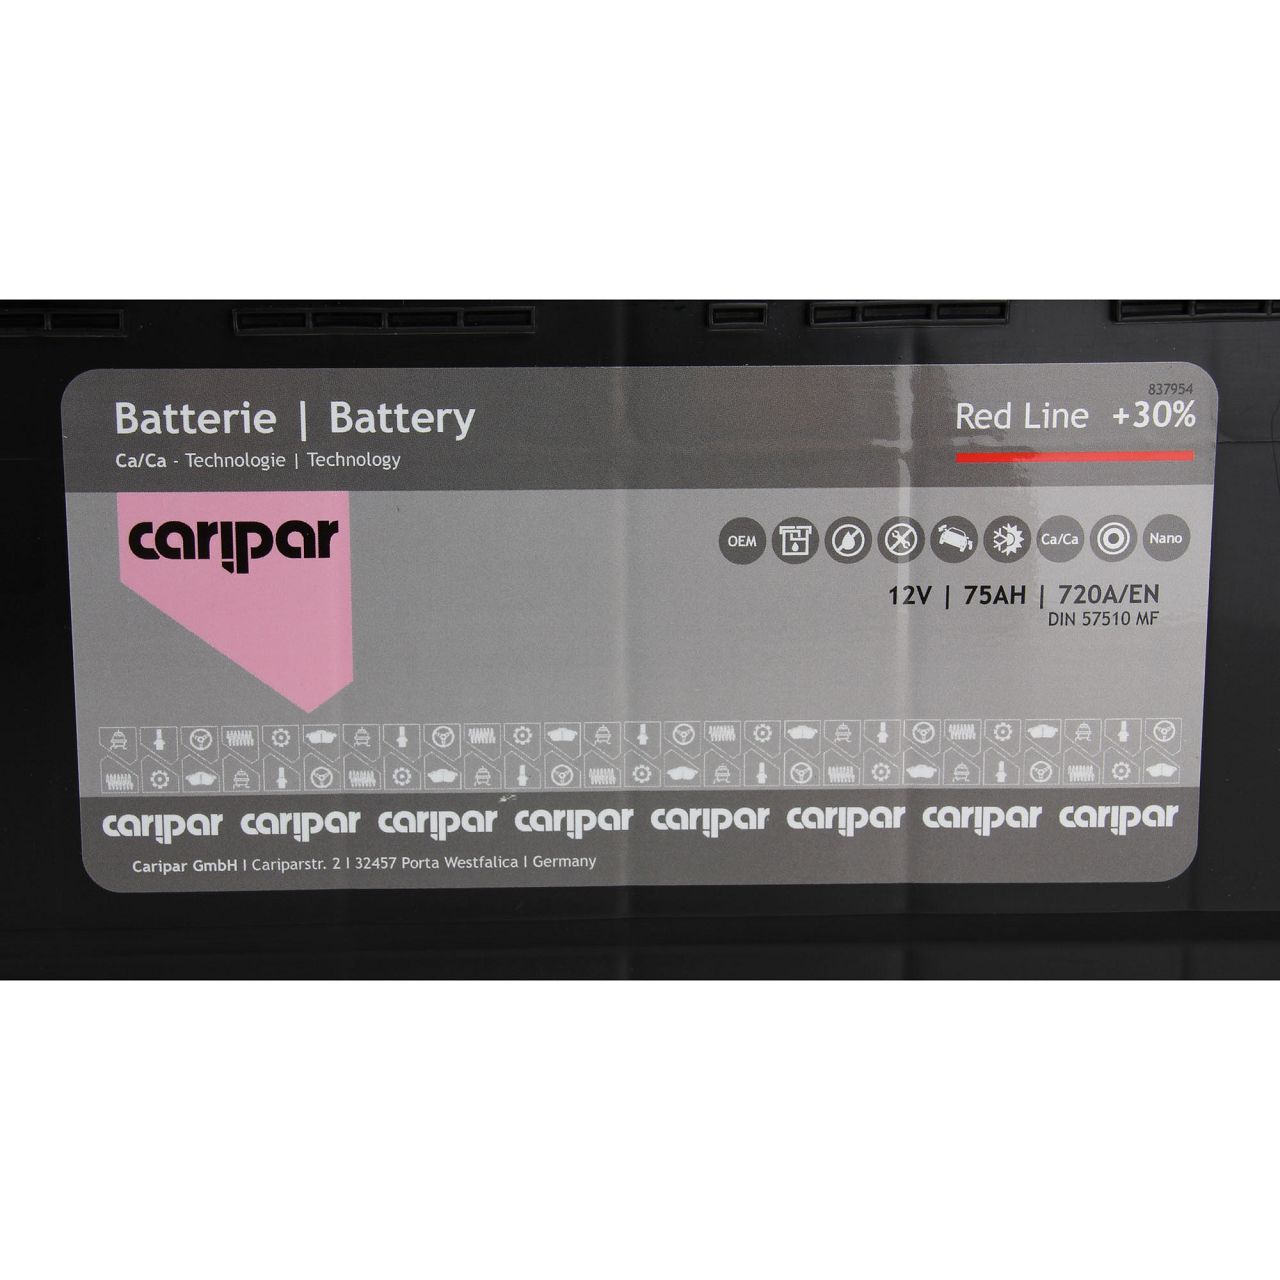 CARIPAR RED LINE +30% PKW KFZ Autobatterie Starterbatterie 12V 75Ah 720A/EN B13